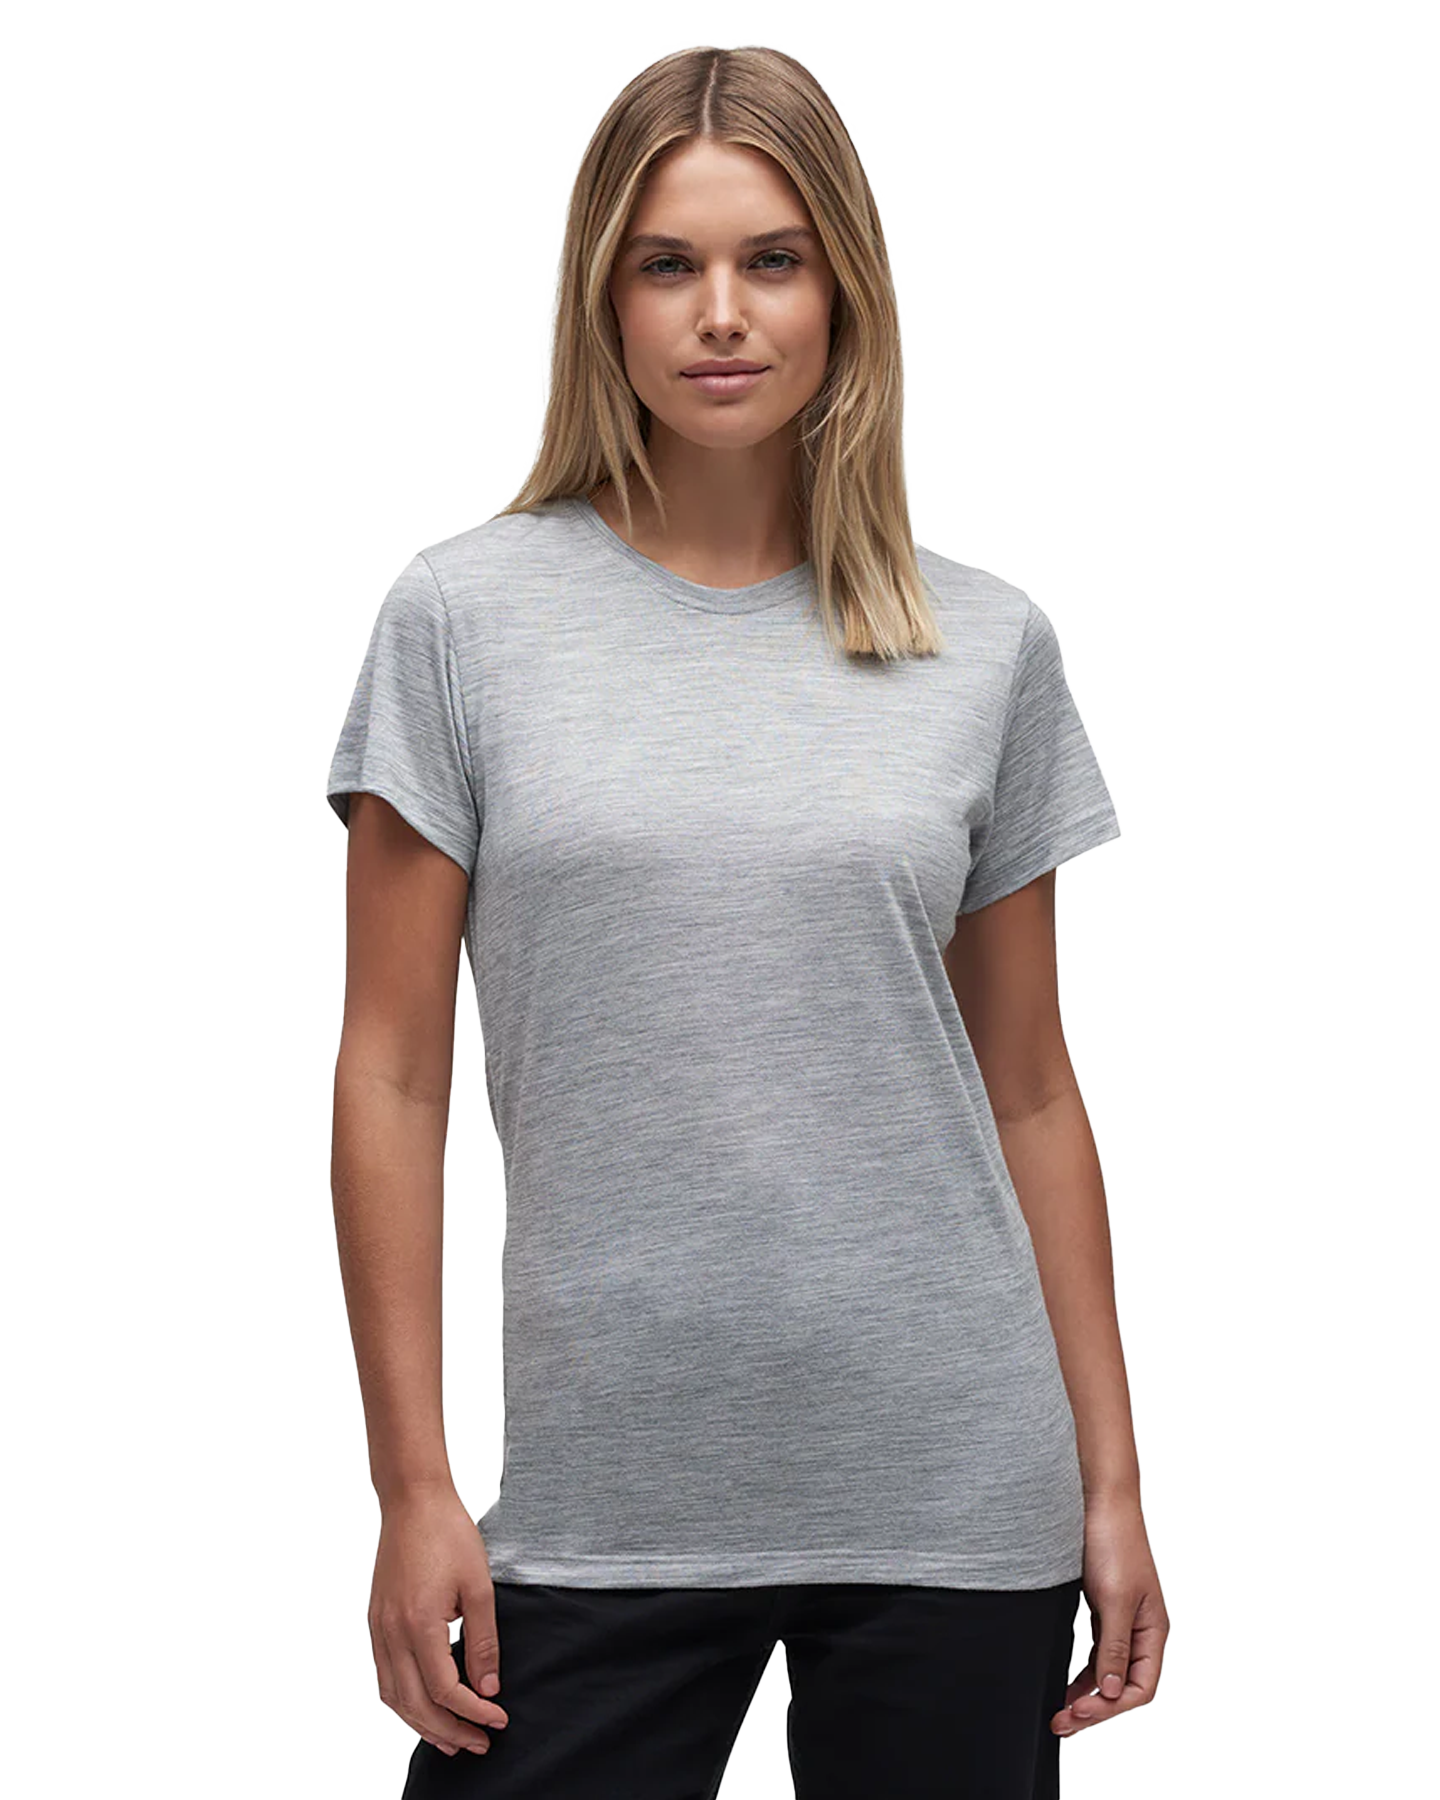 Le Bent Women's Ultralight Short Sleeve Tee - Heather Grey Shirts & Tops - SnowSkiersWarehouse